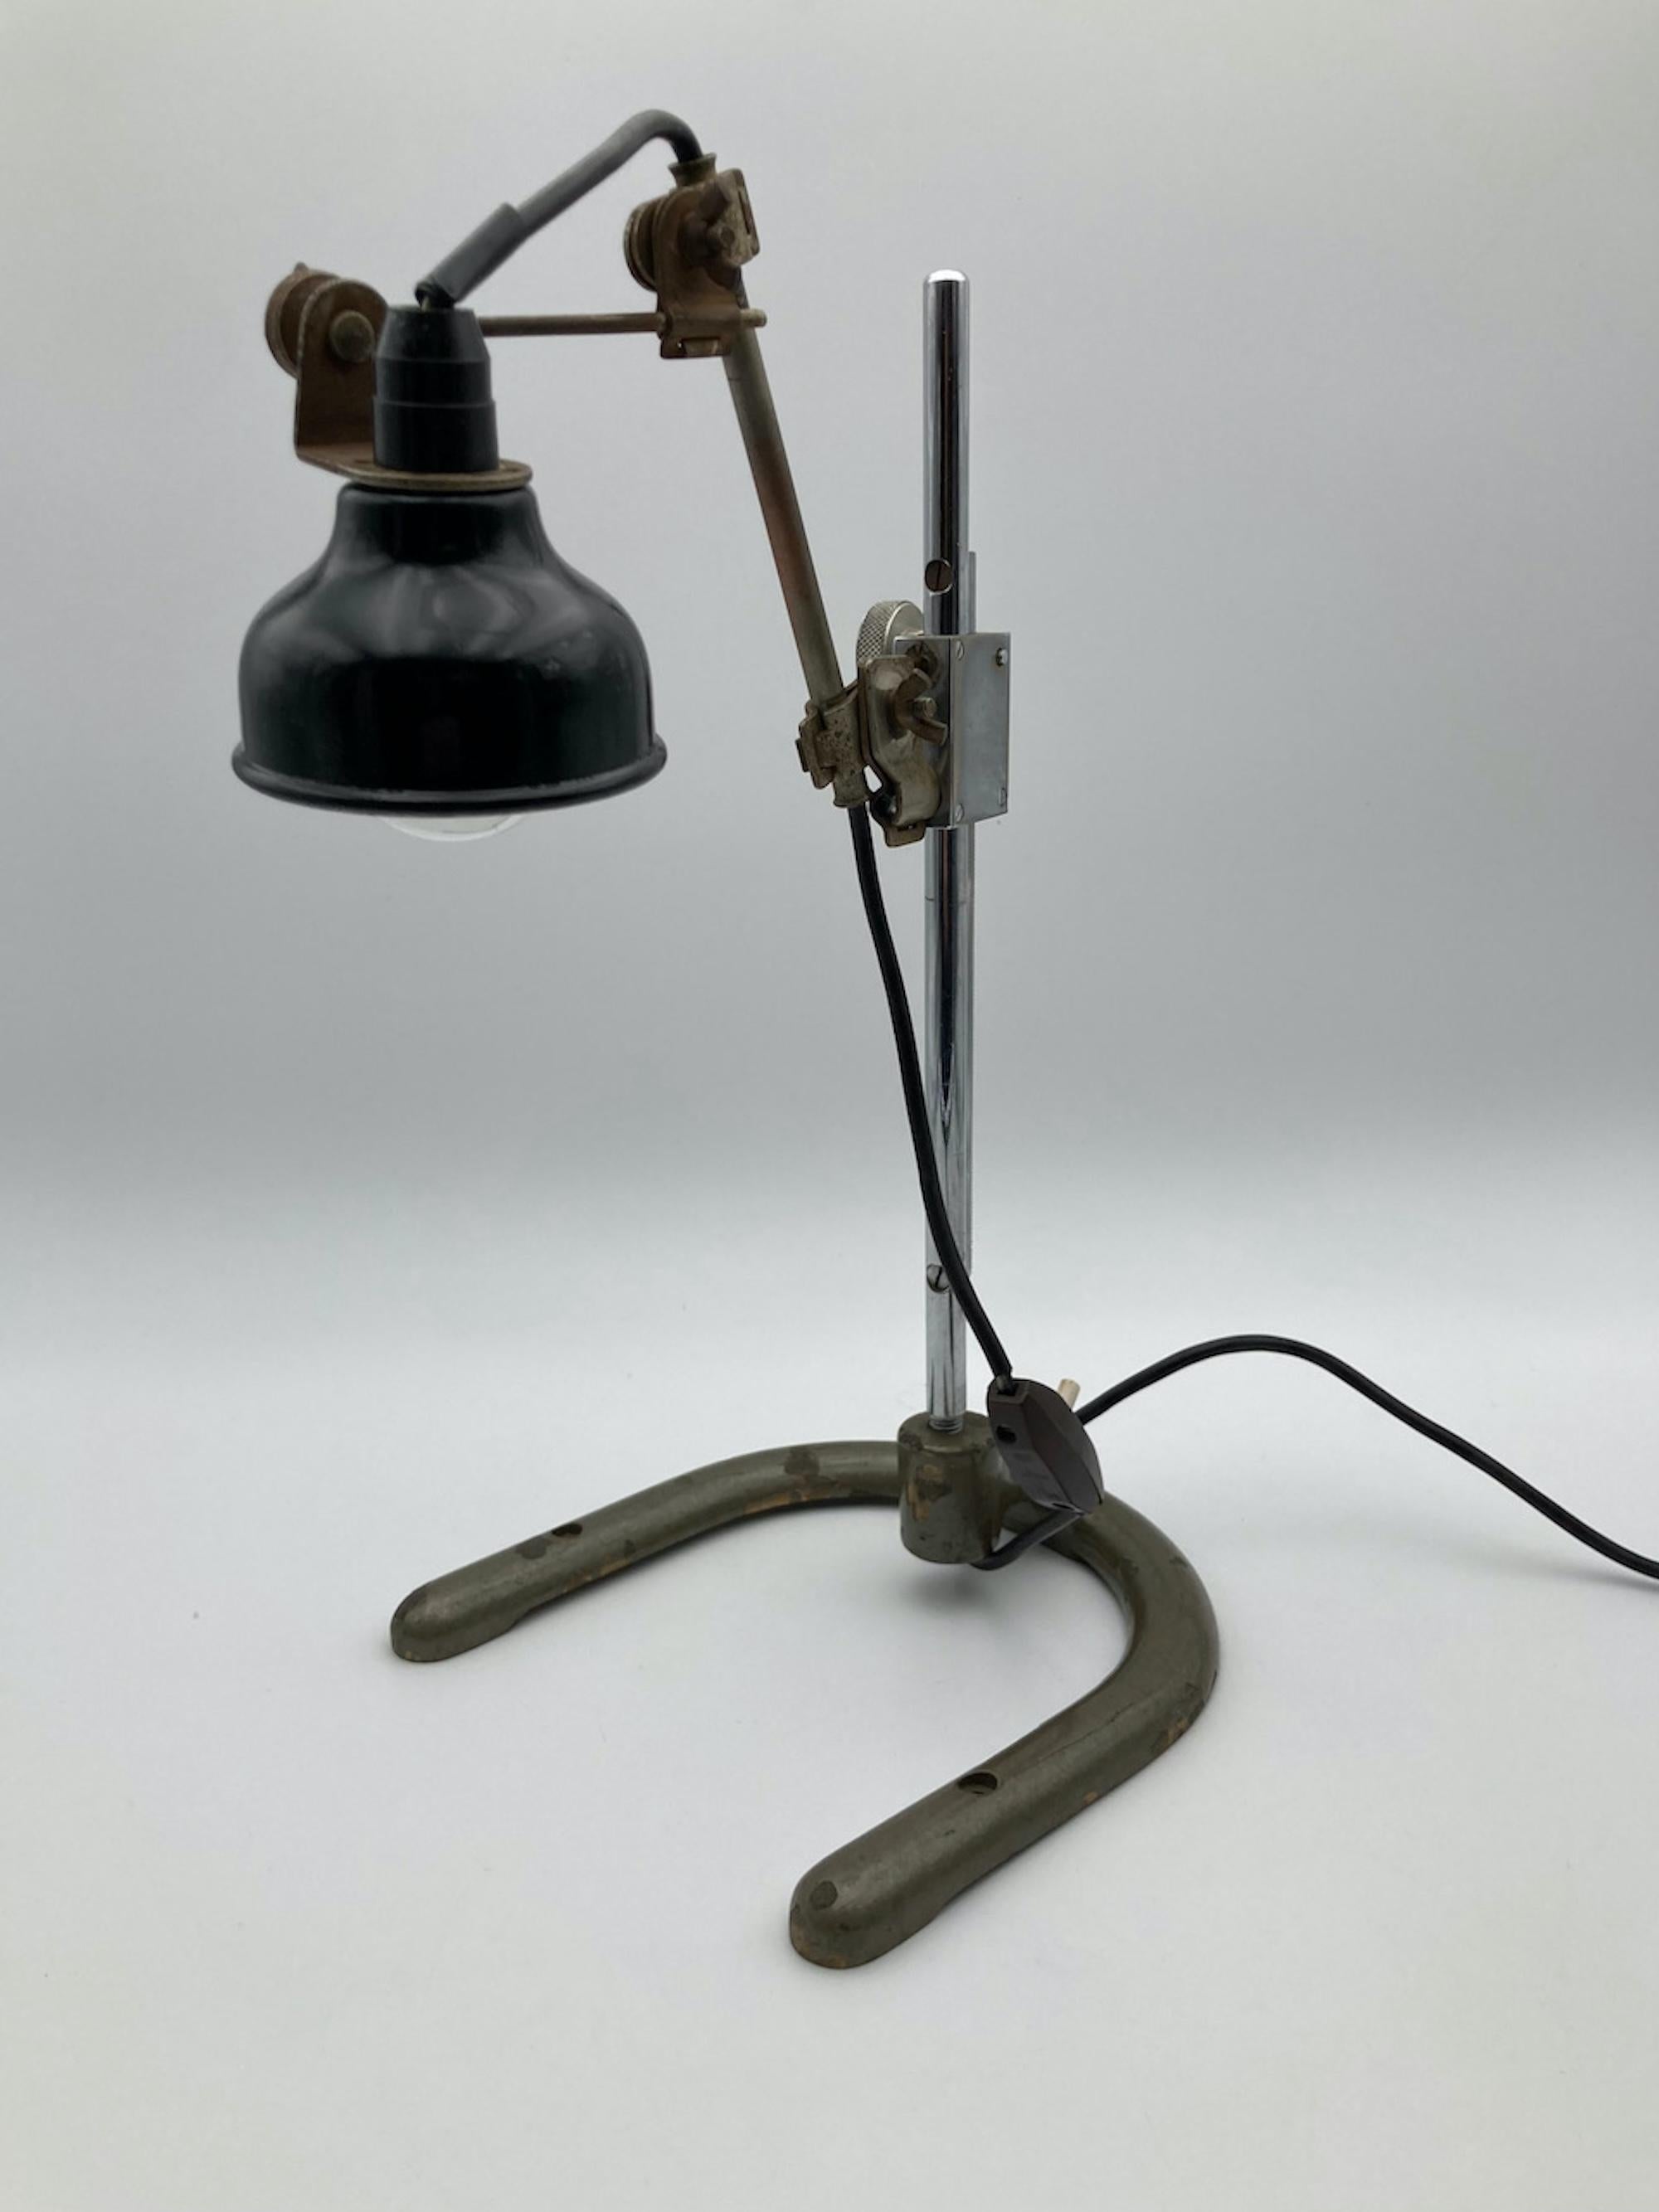 Brutalist Italian Artisanal Lamp in Metal and Bakelite, 1970s For Sale 2